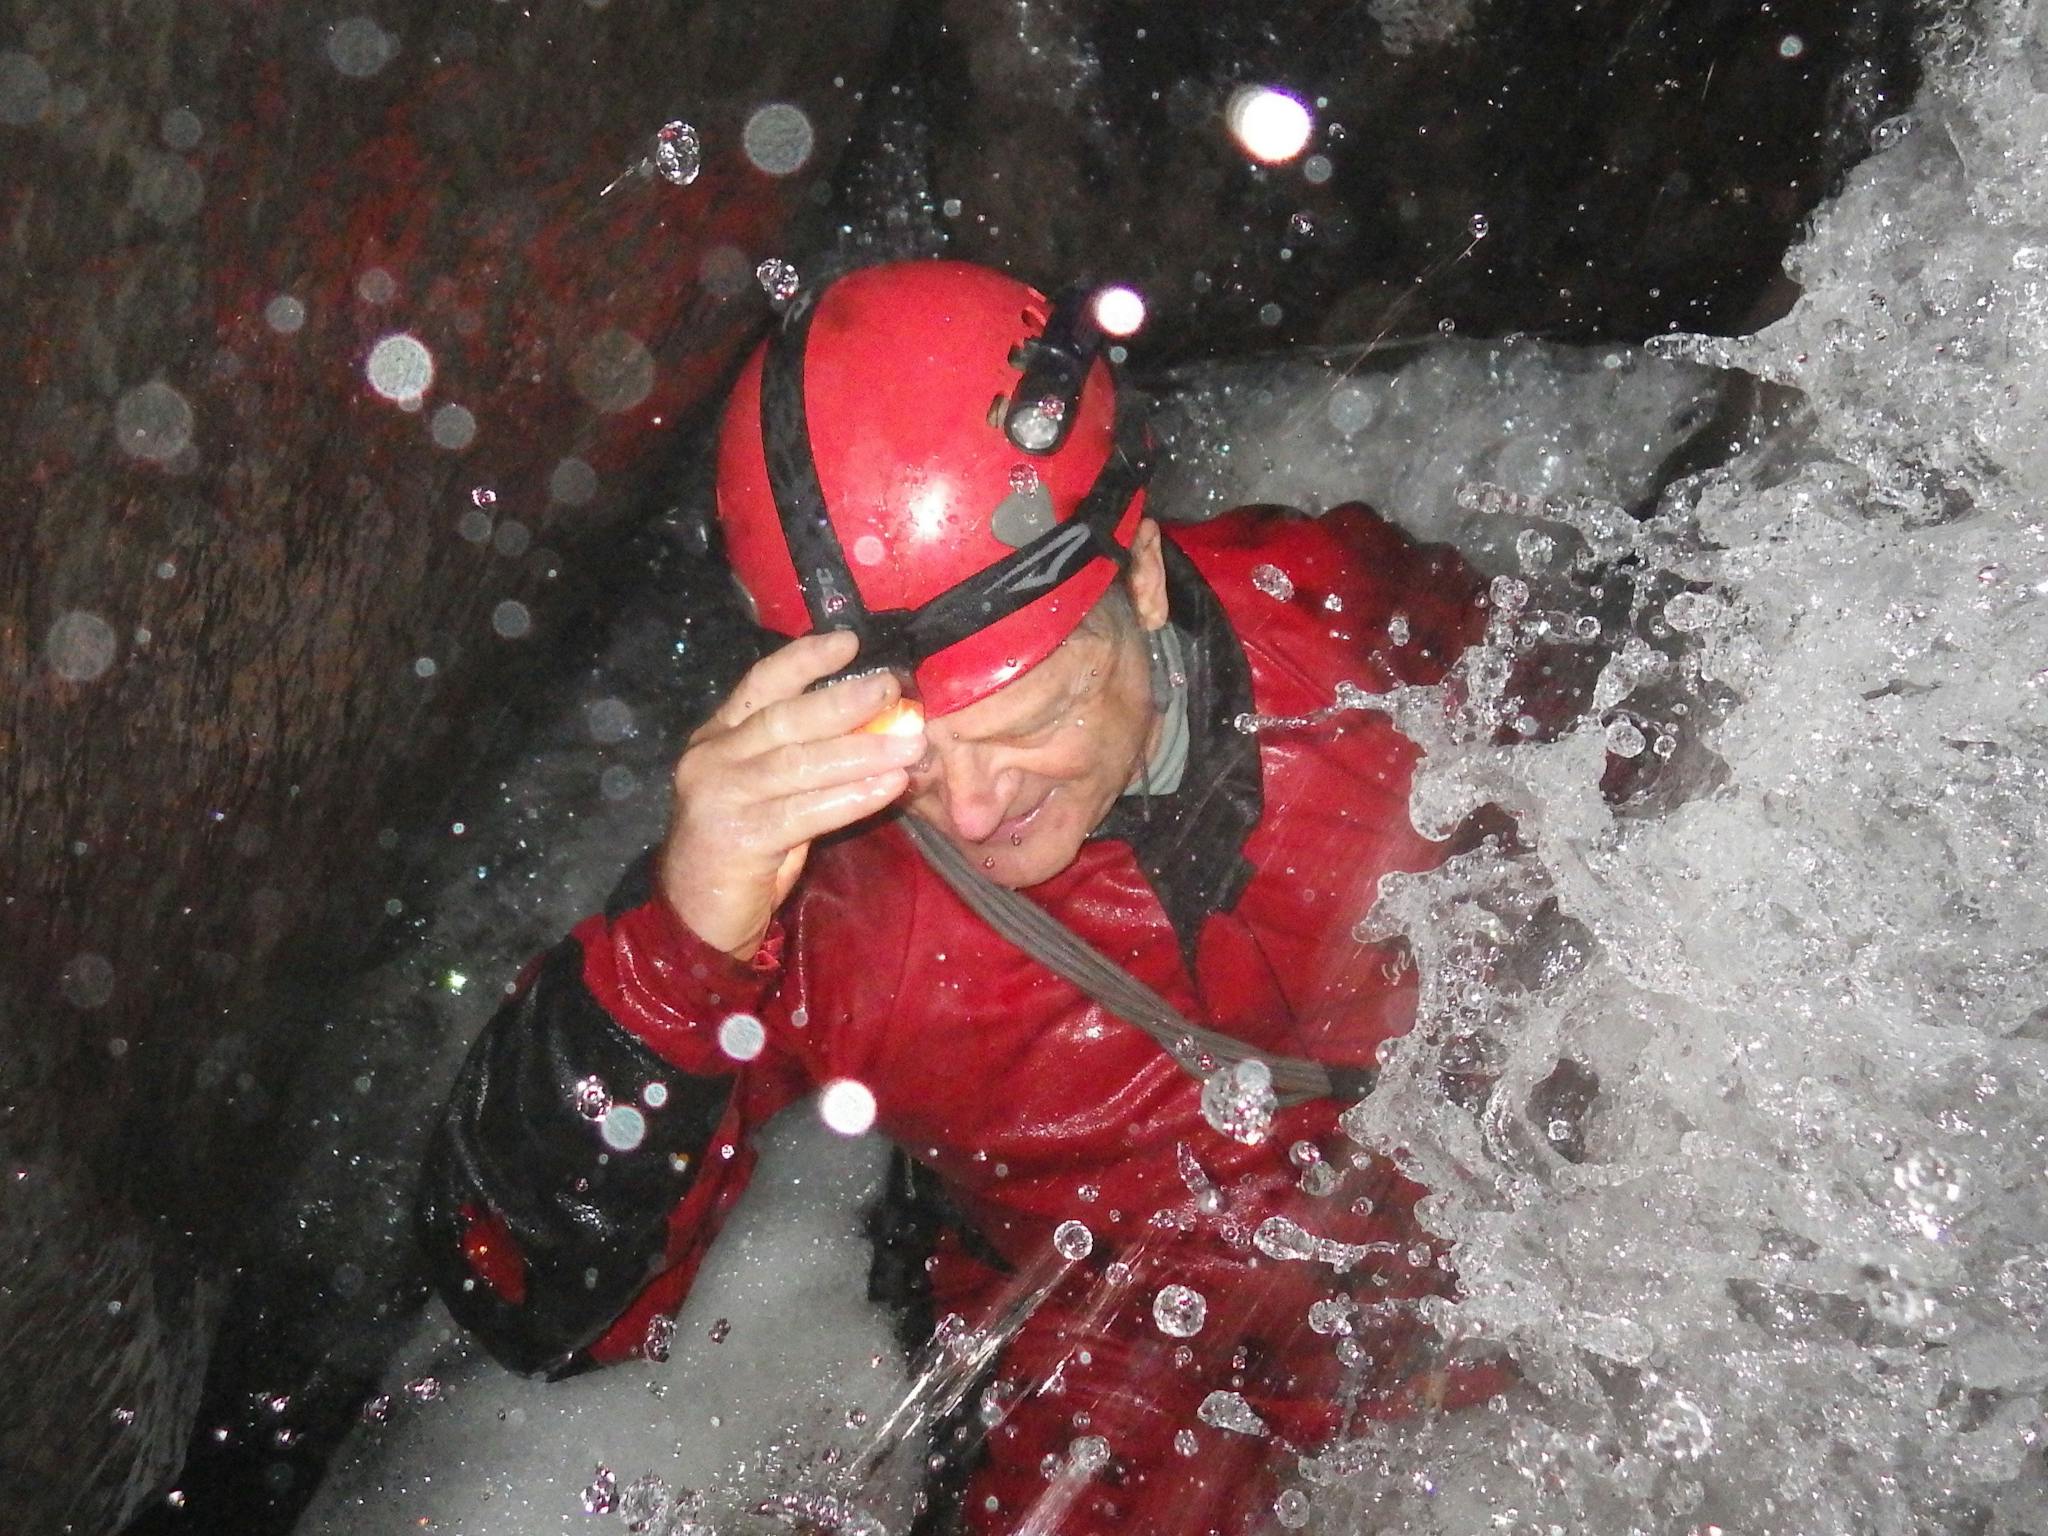 Caving through The Underground River